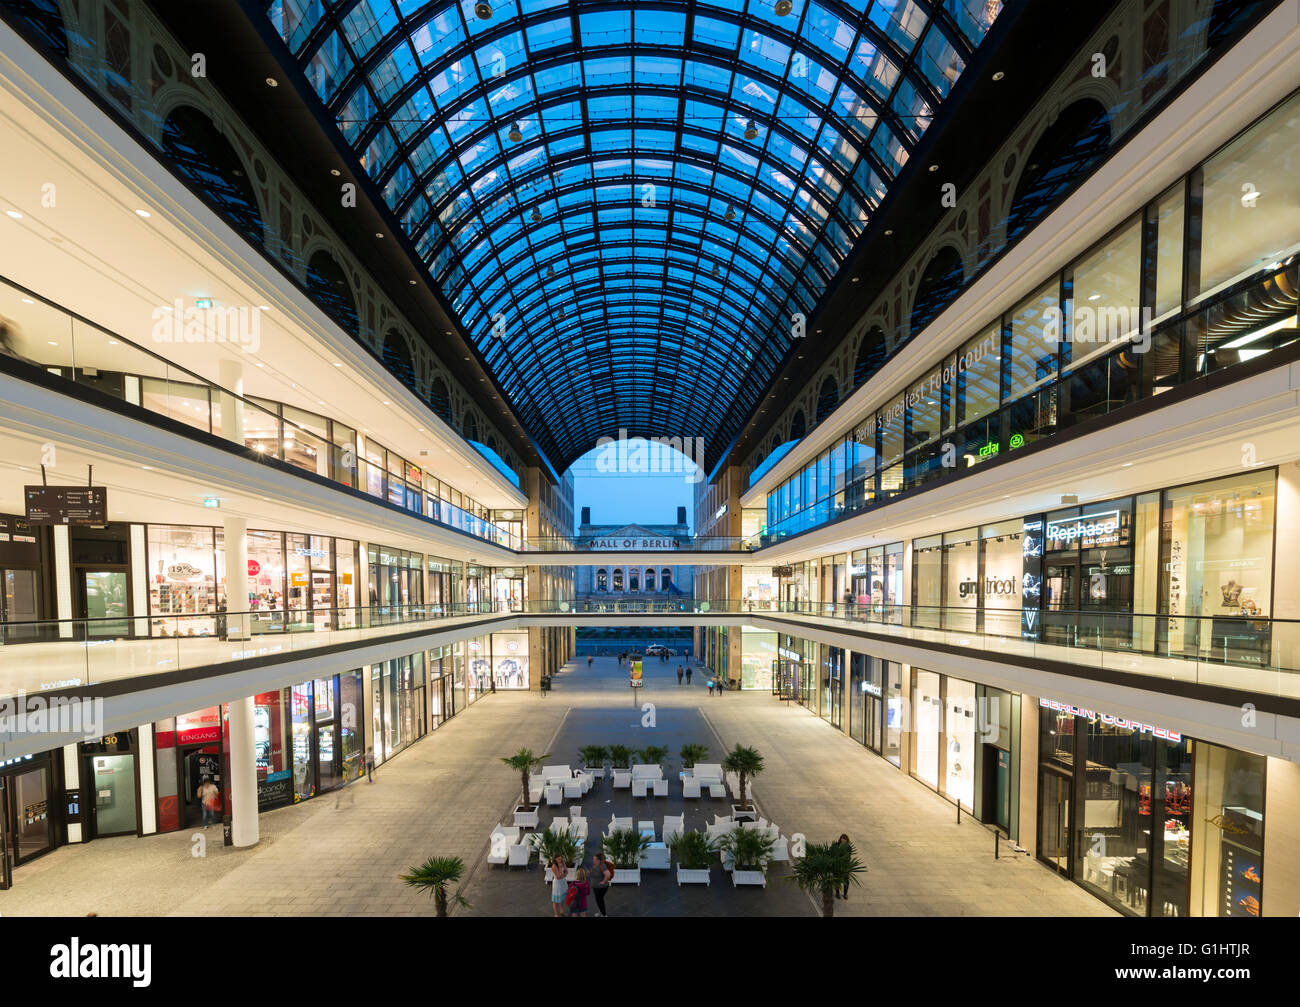 View of new Mall of Berlin shopping mall in Potsdamer Platz Berlin Germany Stock Photo